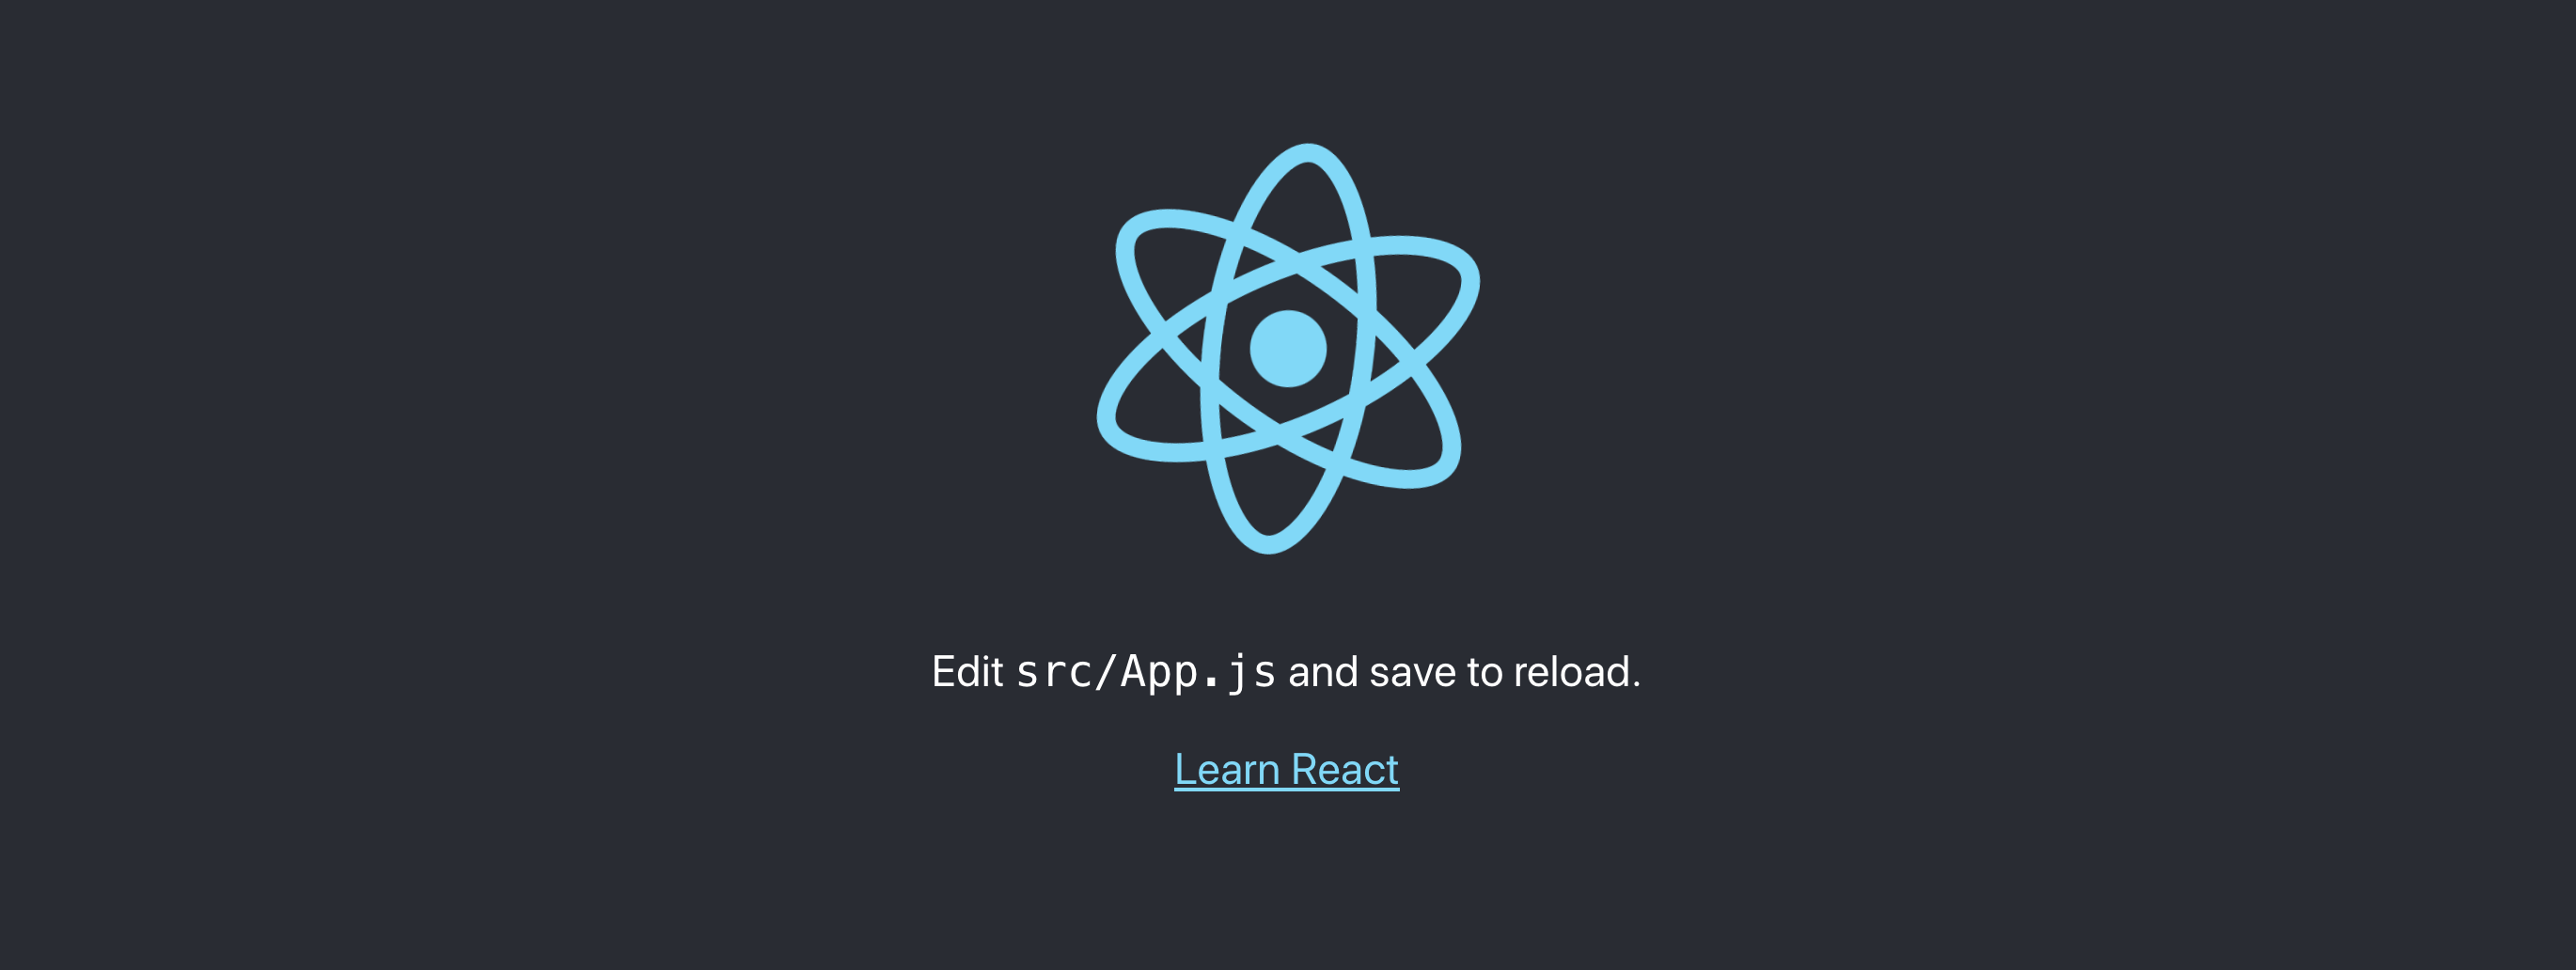 react_setup-038-default-react-app.webp